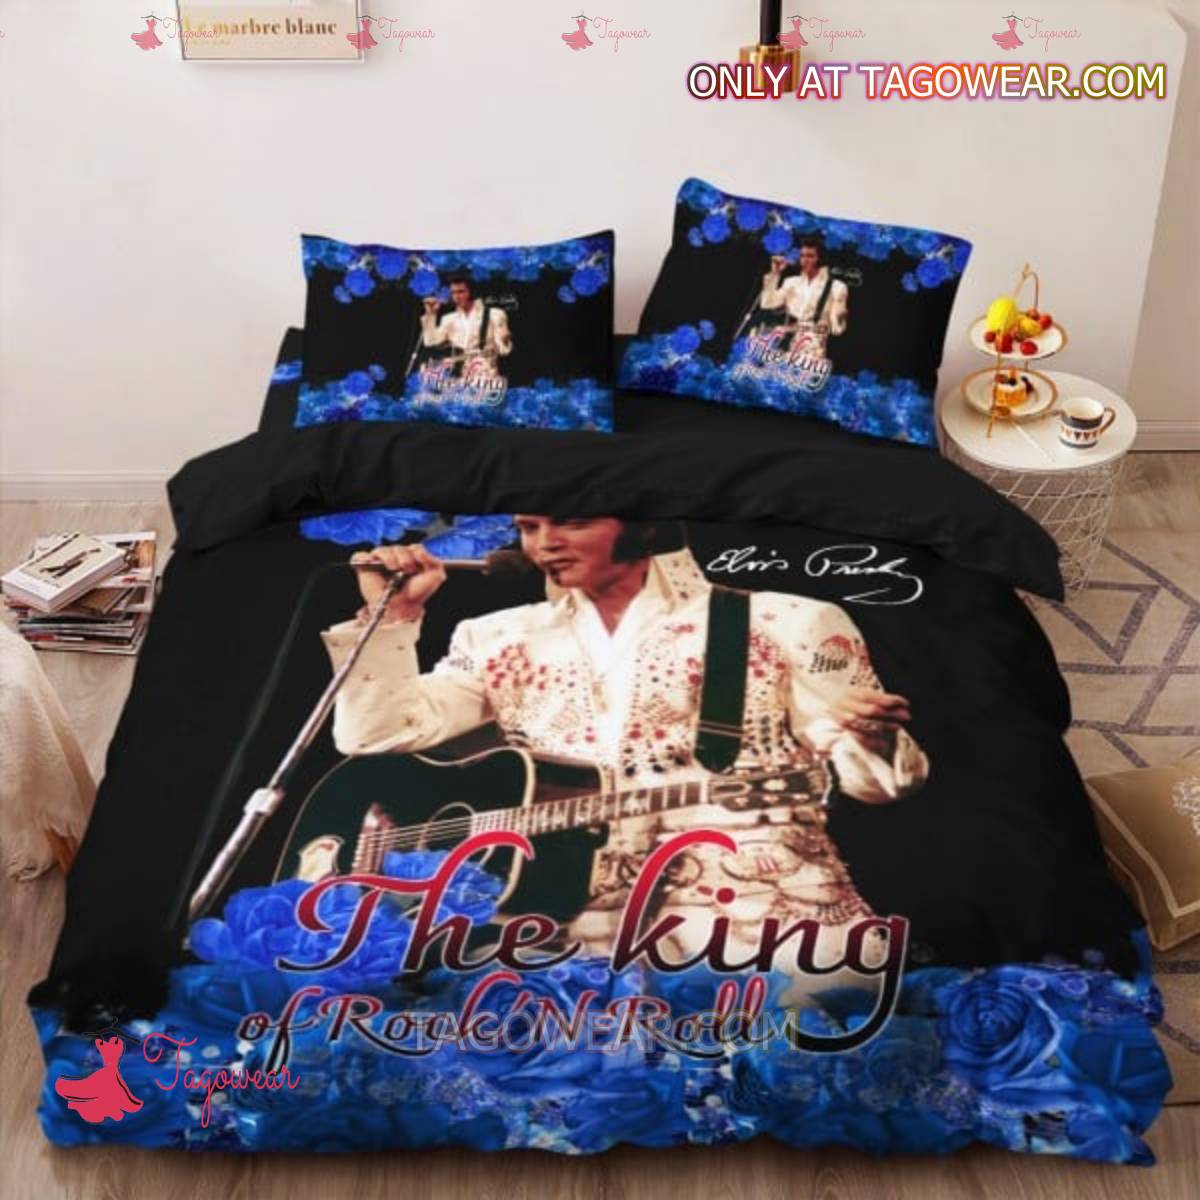 The King Of Rock 'n Roll Elvis Presley Signatures Blue Roses Bedding Set a